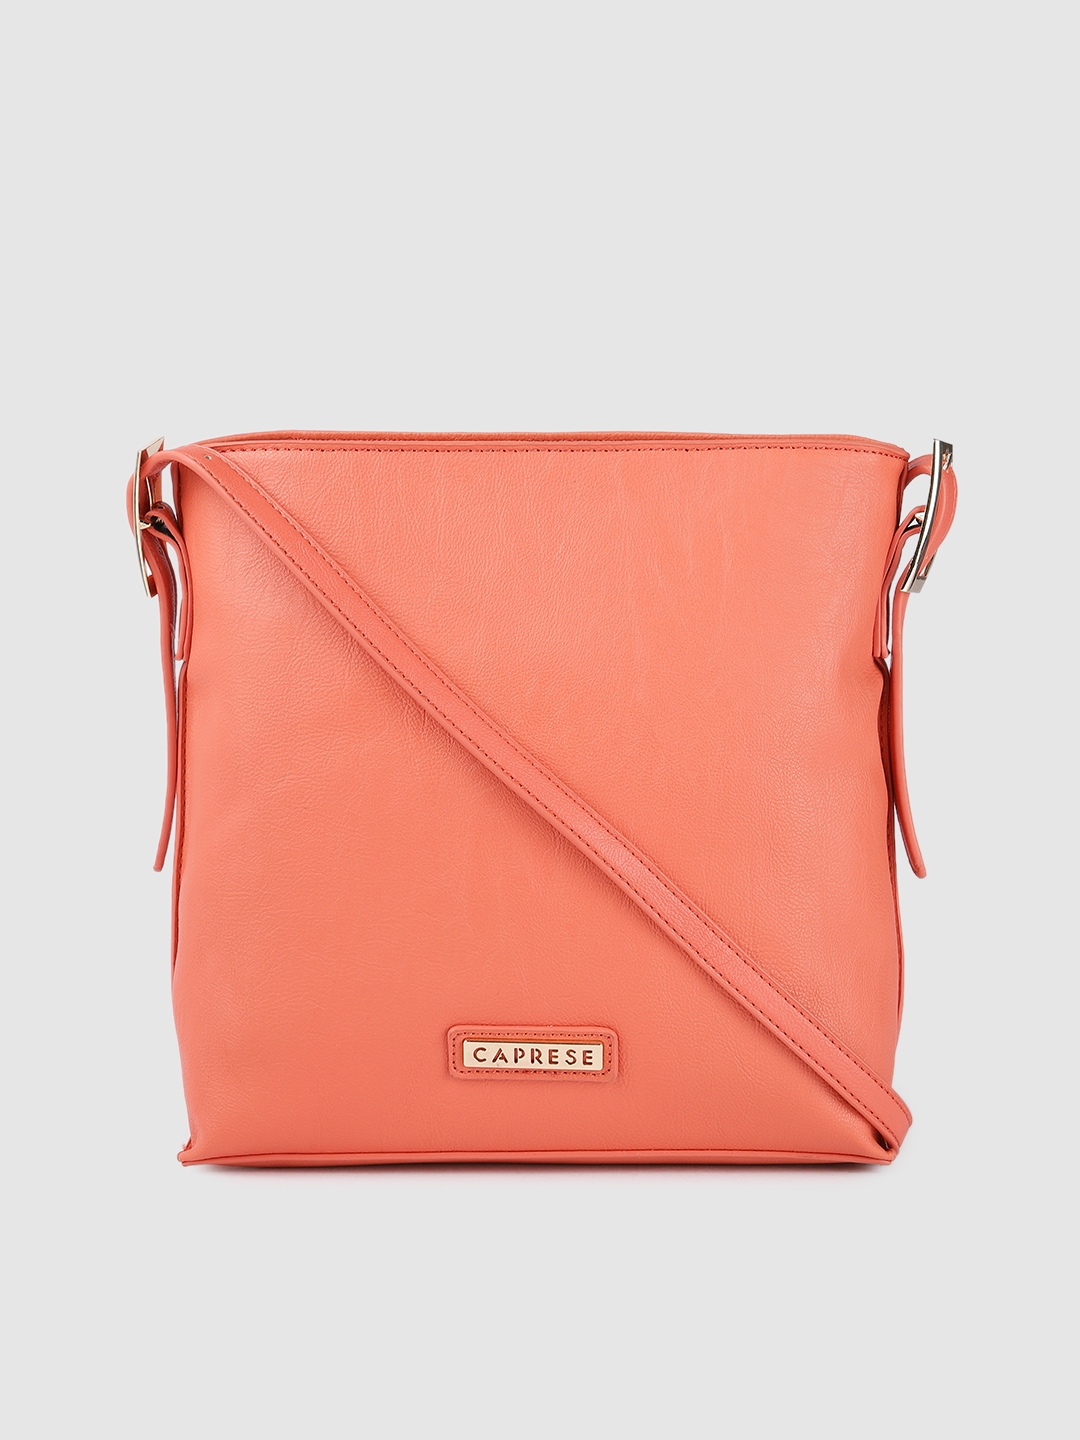 Caprese Pink Leather Structured Sling Bag